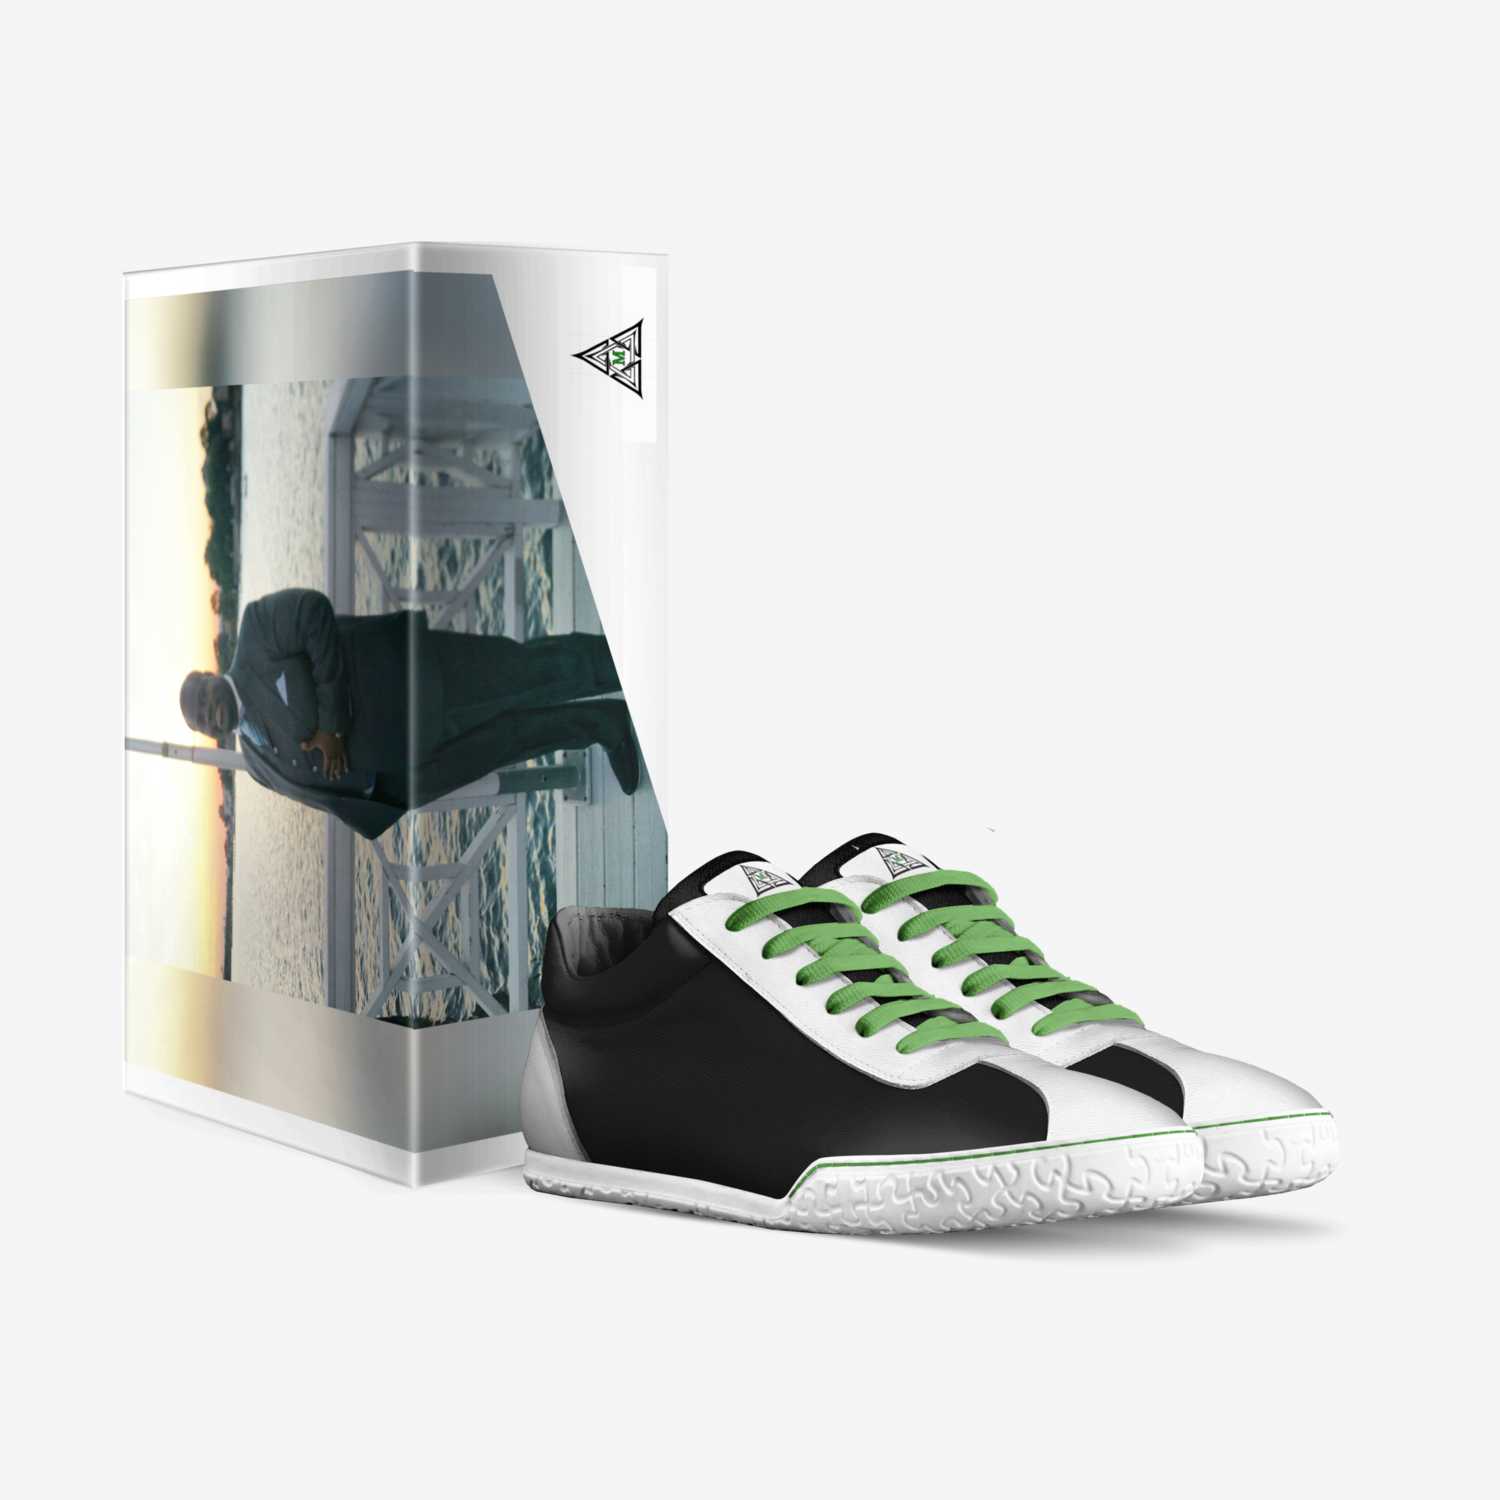 Murphnetti LS custom made in Italy shoes by Tyriek Murphy | Box view